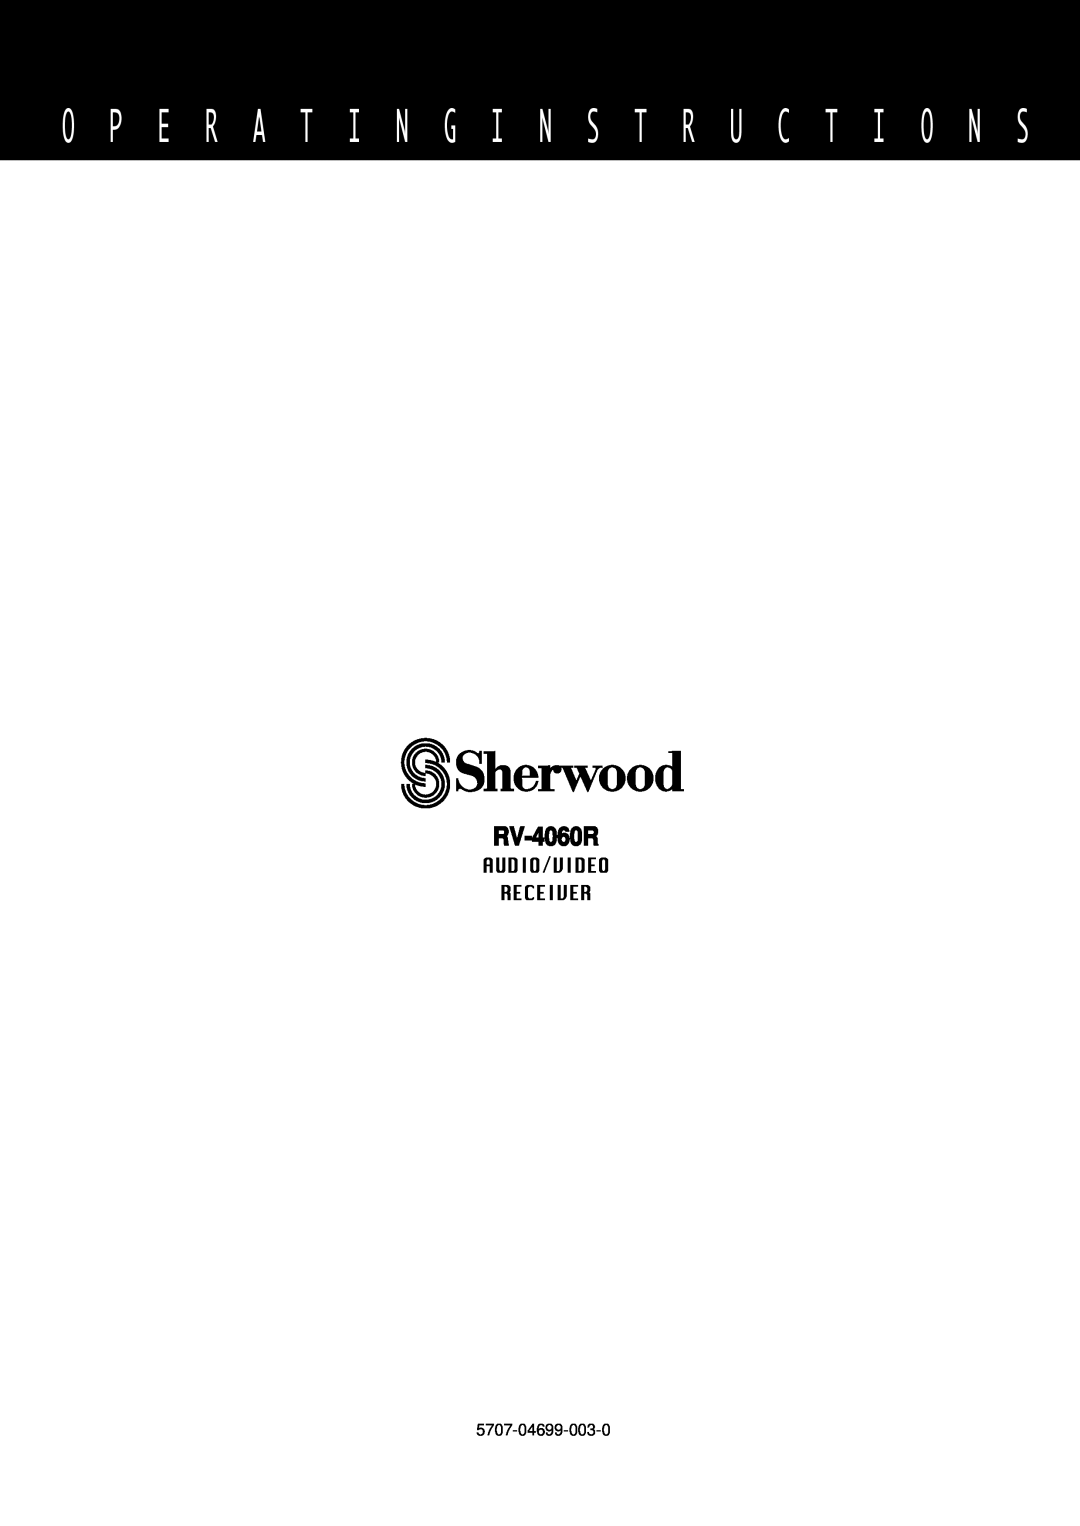 Sherwood RV-4060R manual O P E R A T I N G I N S T R U C T I O N S, Audio/Video Receiver 